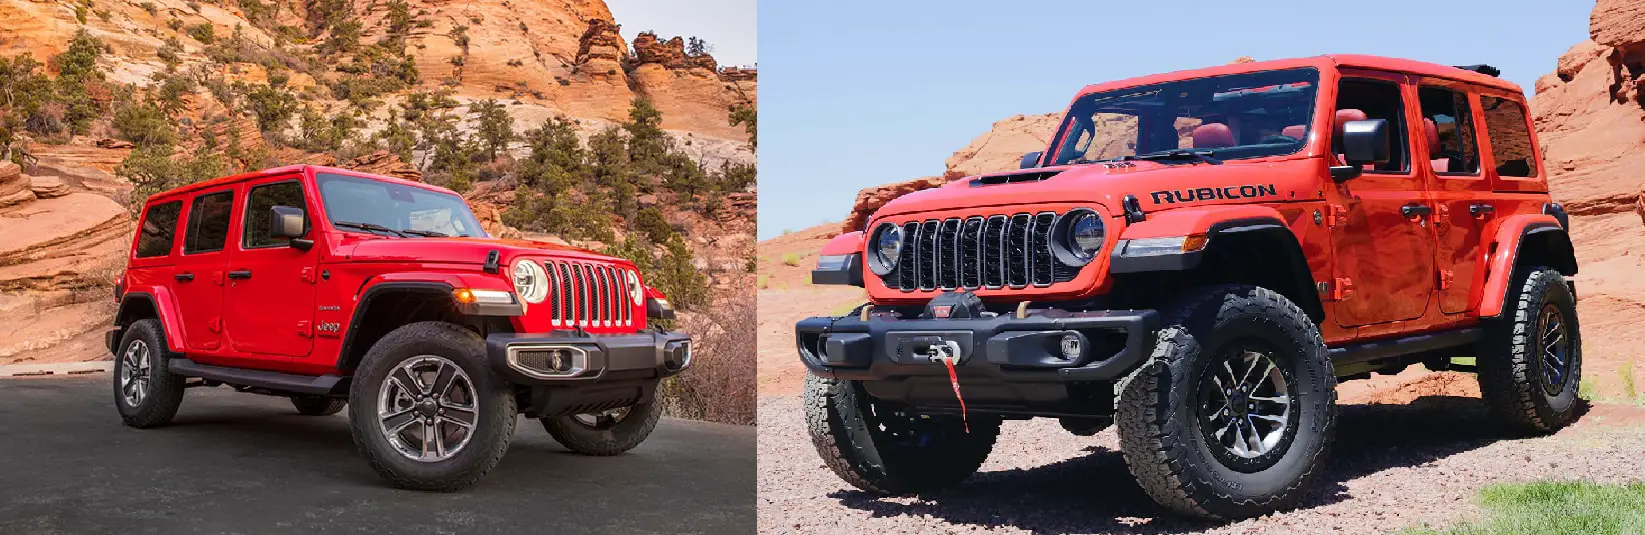 Jeep Wrangler Sahara Vs Rubicon: Unleashing the Power